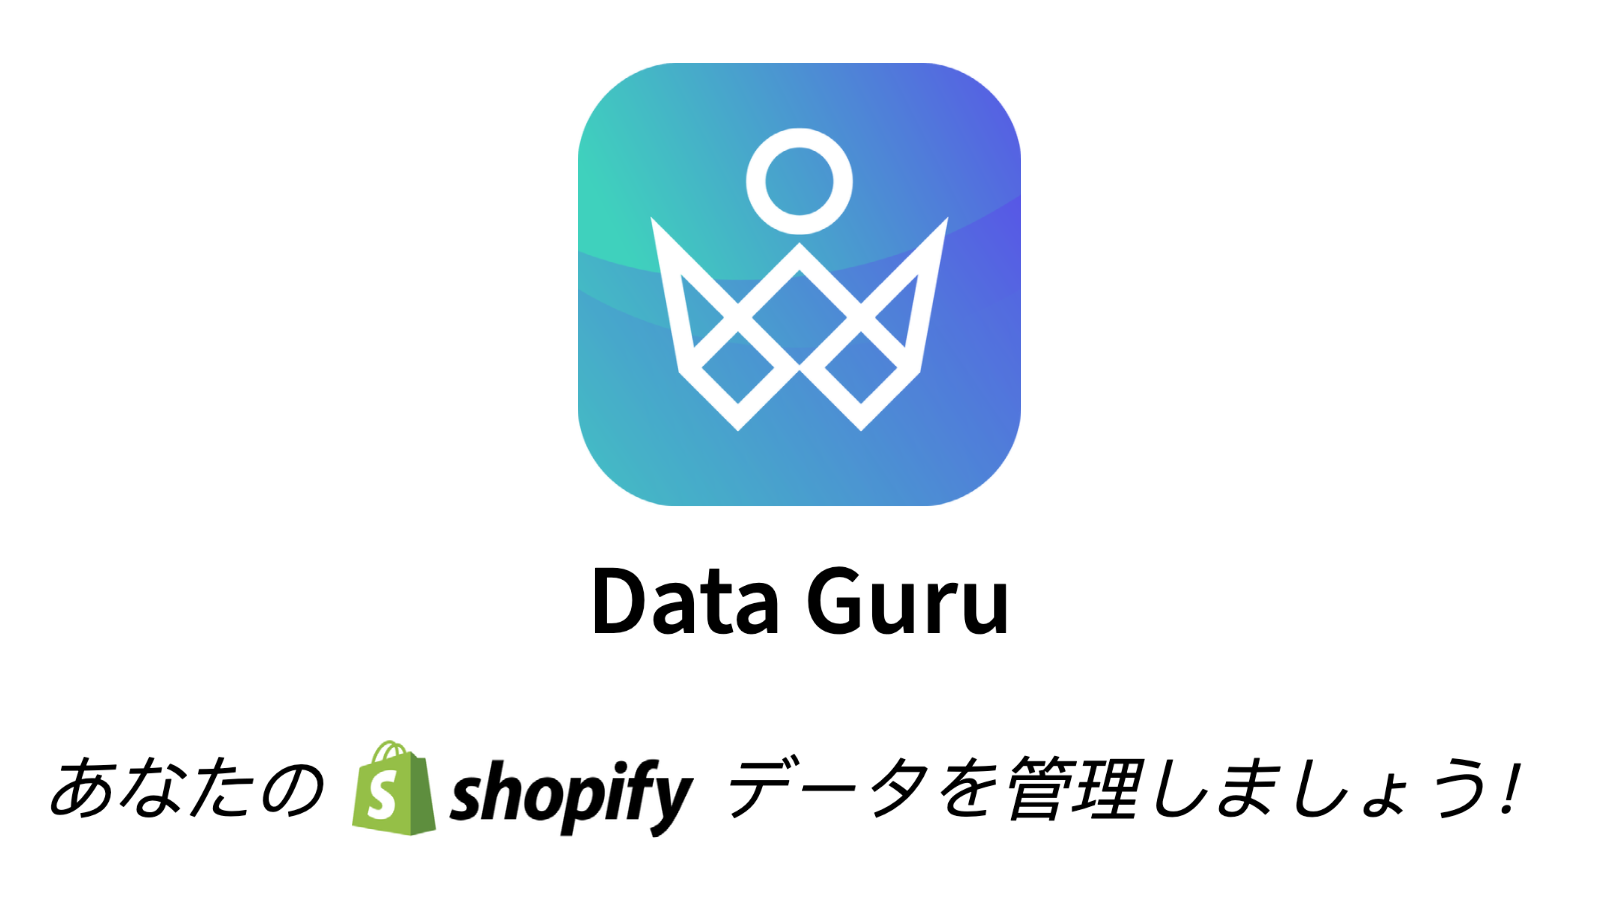 Data Guru: あなたのshopify データを管理しましょう！